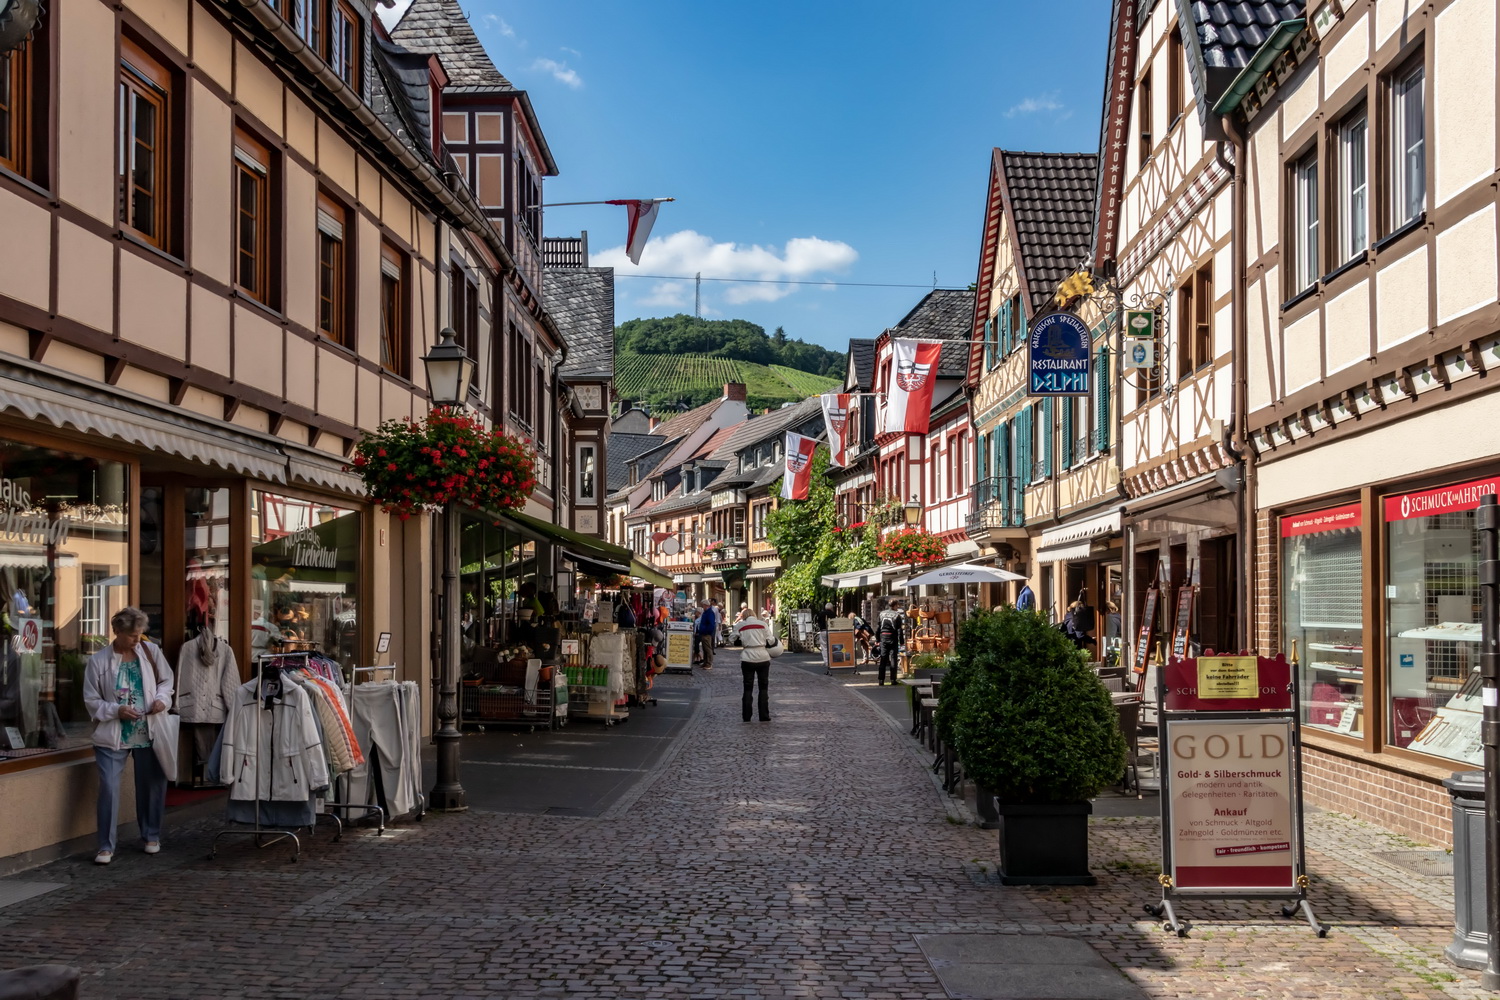 Altstadt von Ahrweiler